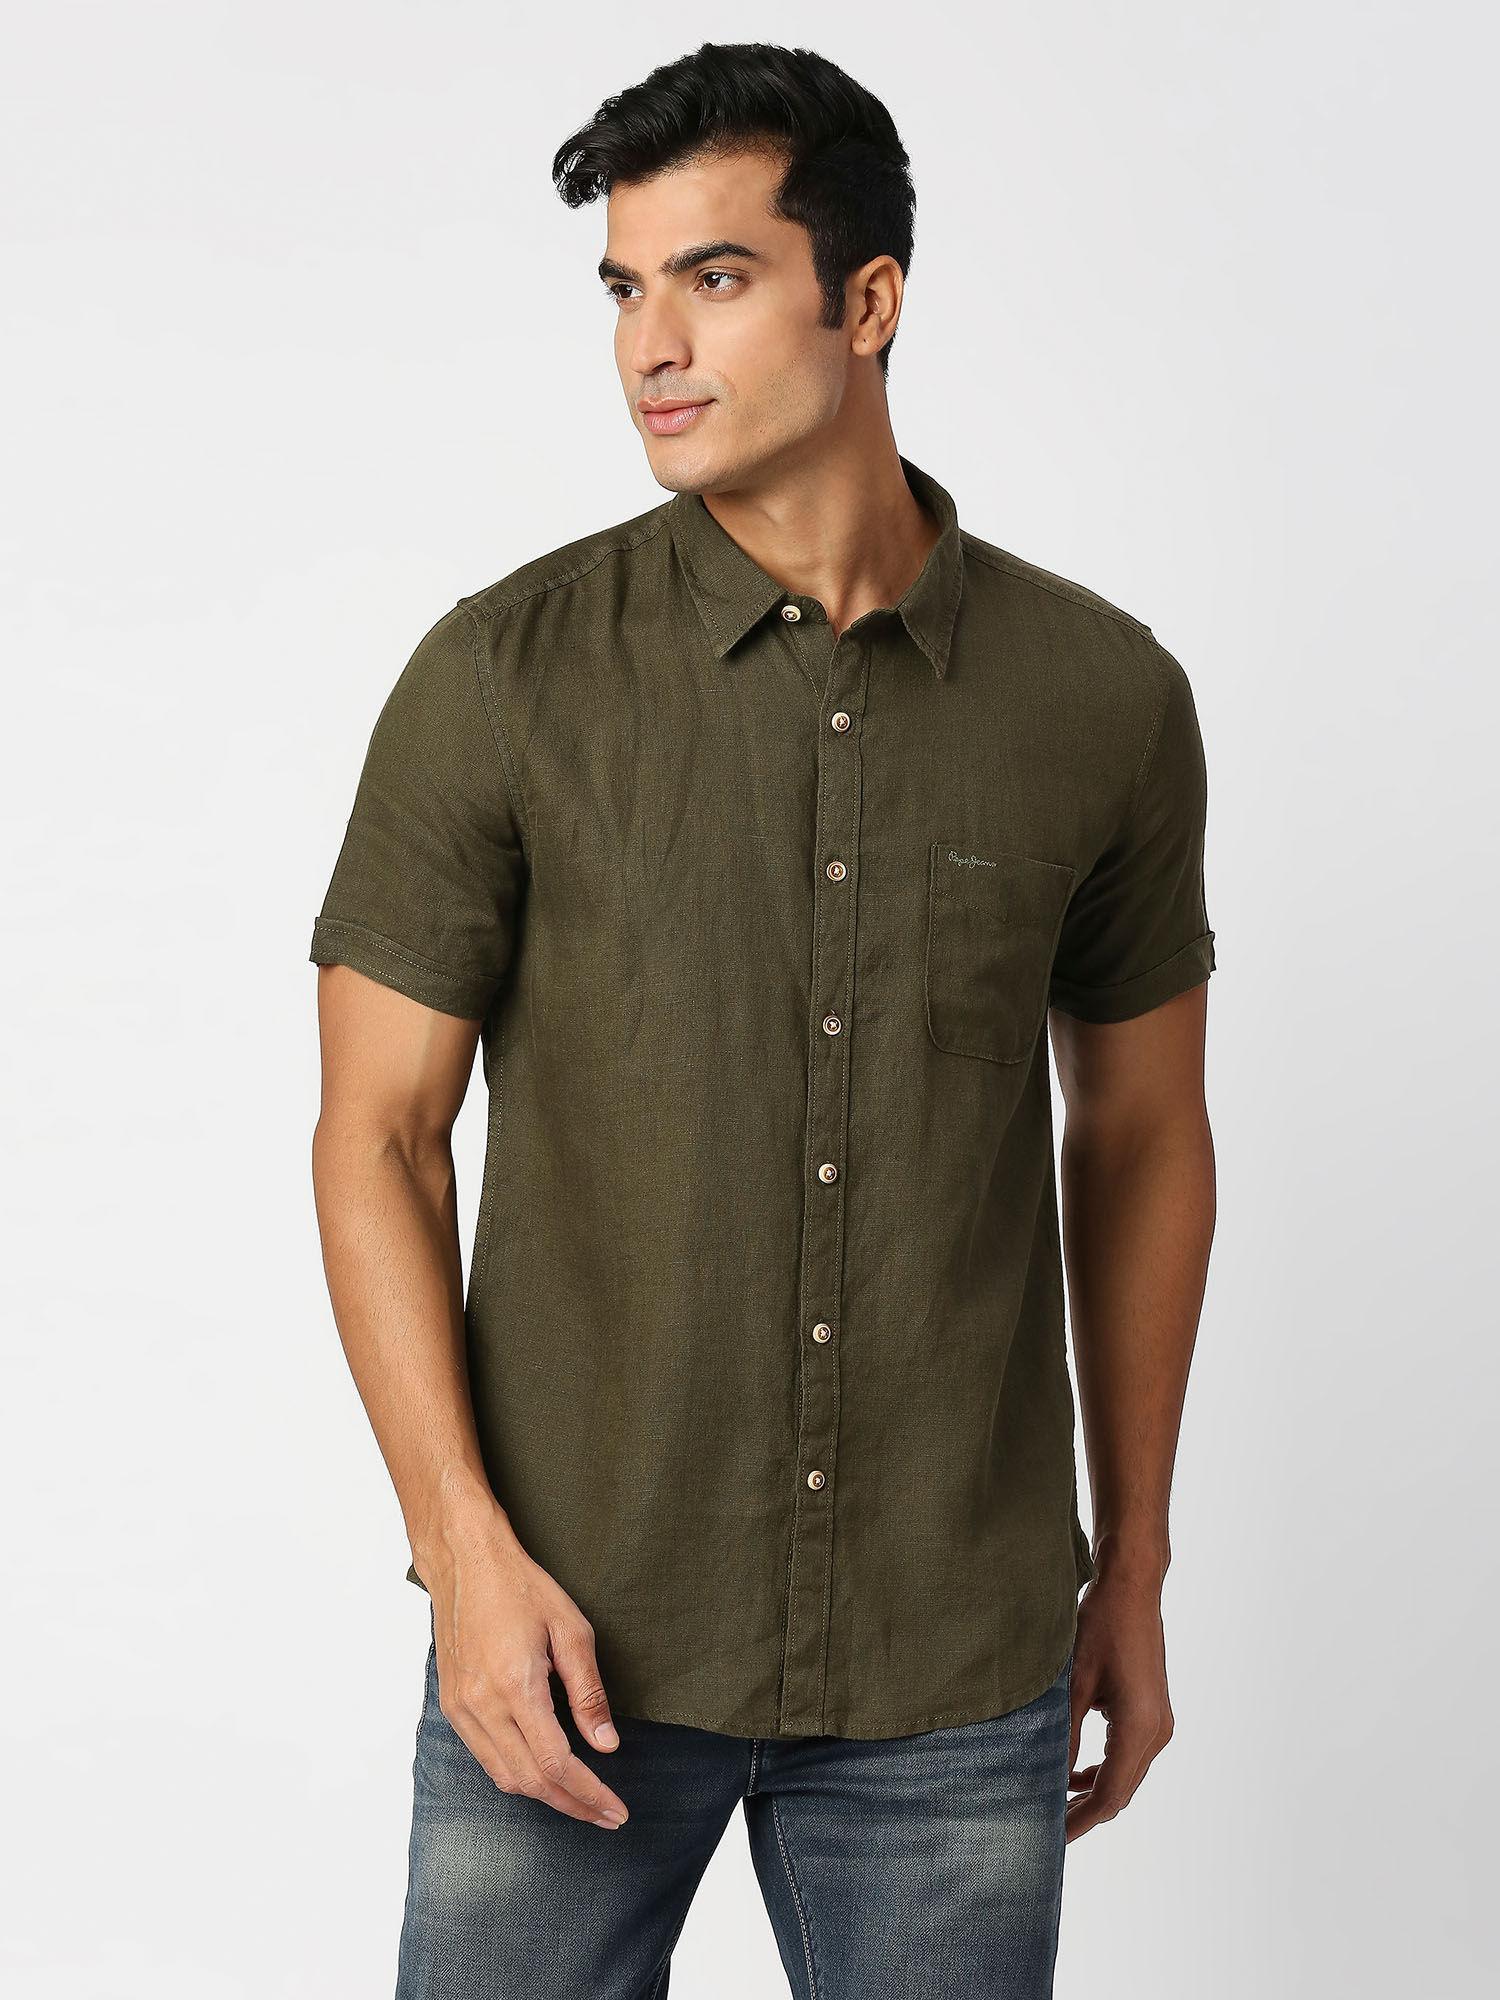 kingsman-half-sleeves-olive-pure-linen-casual-shirt